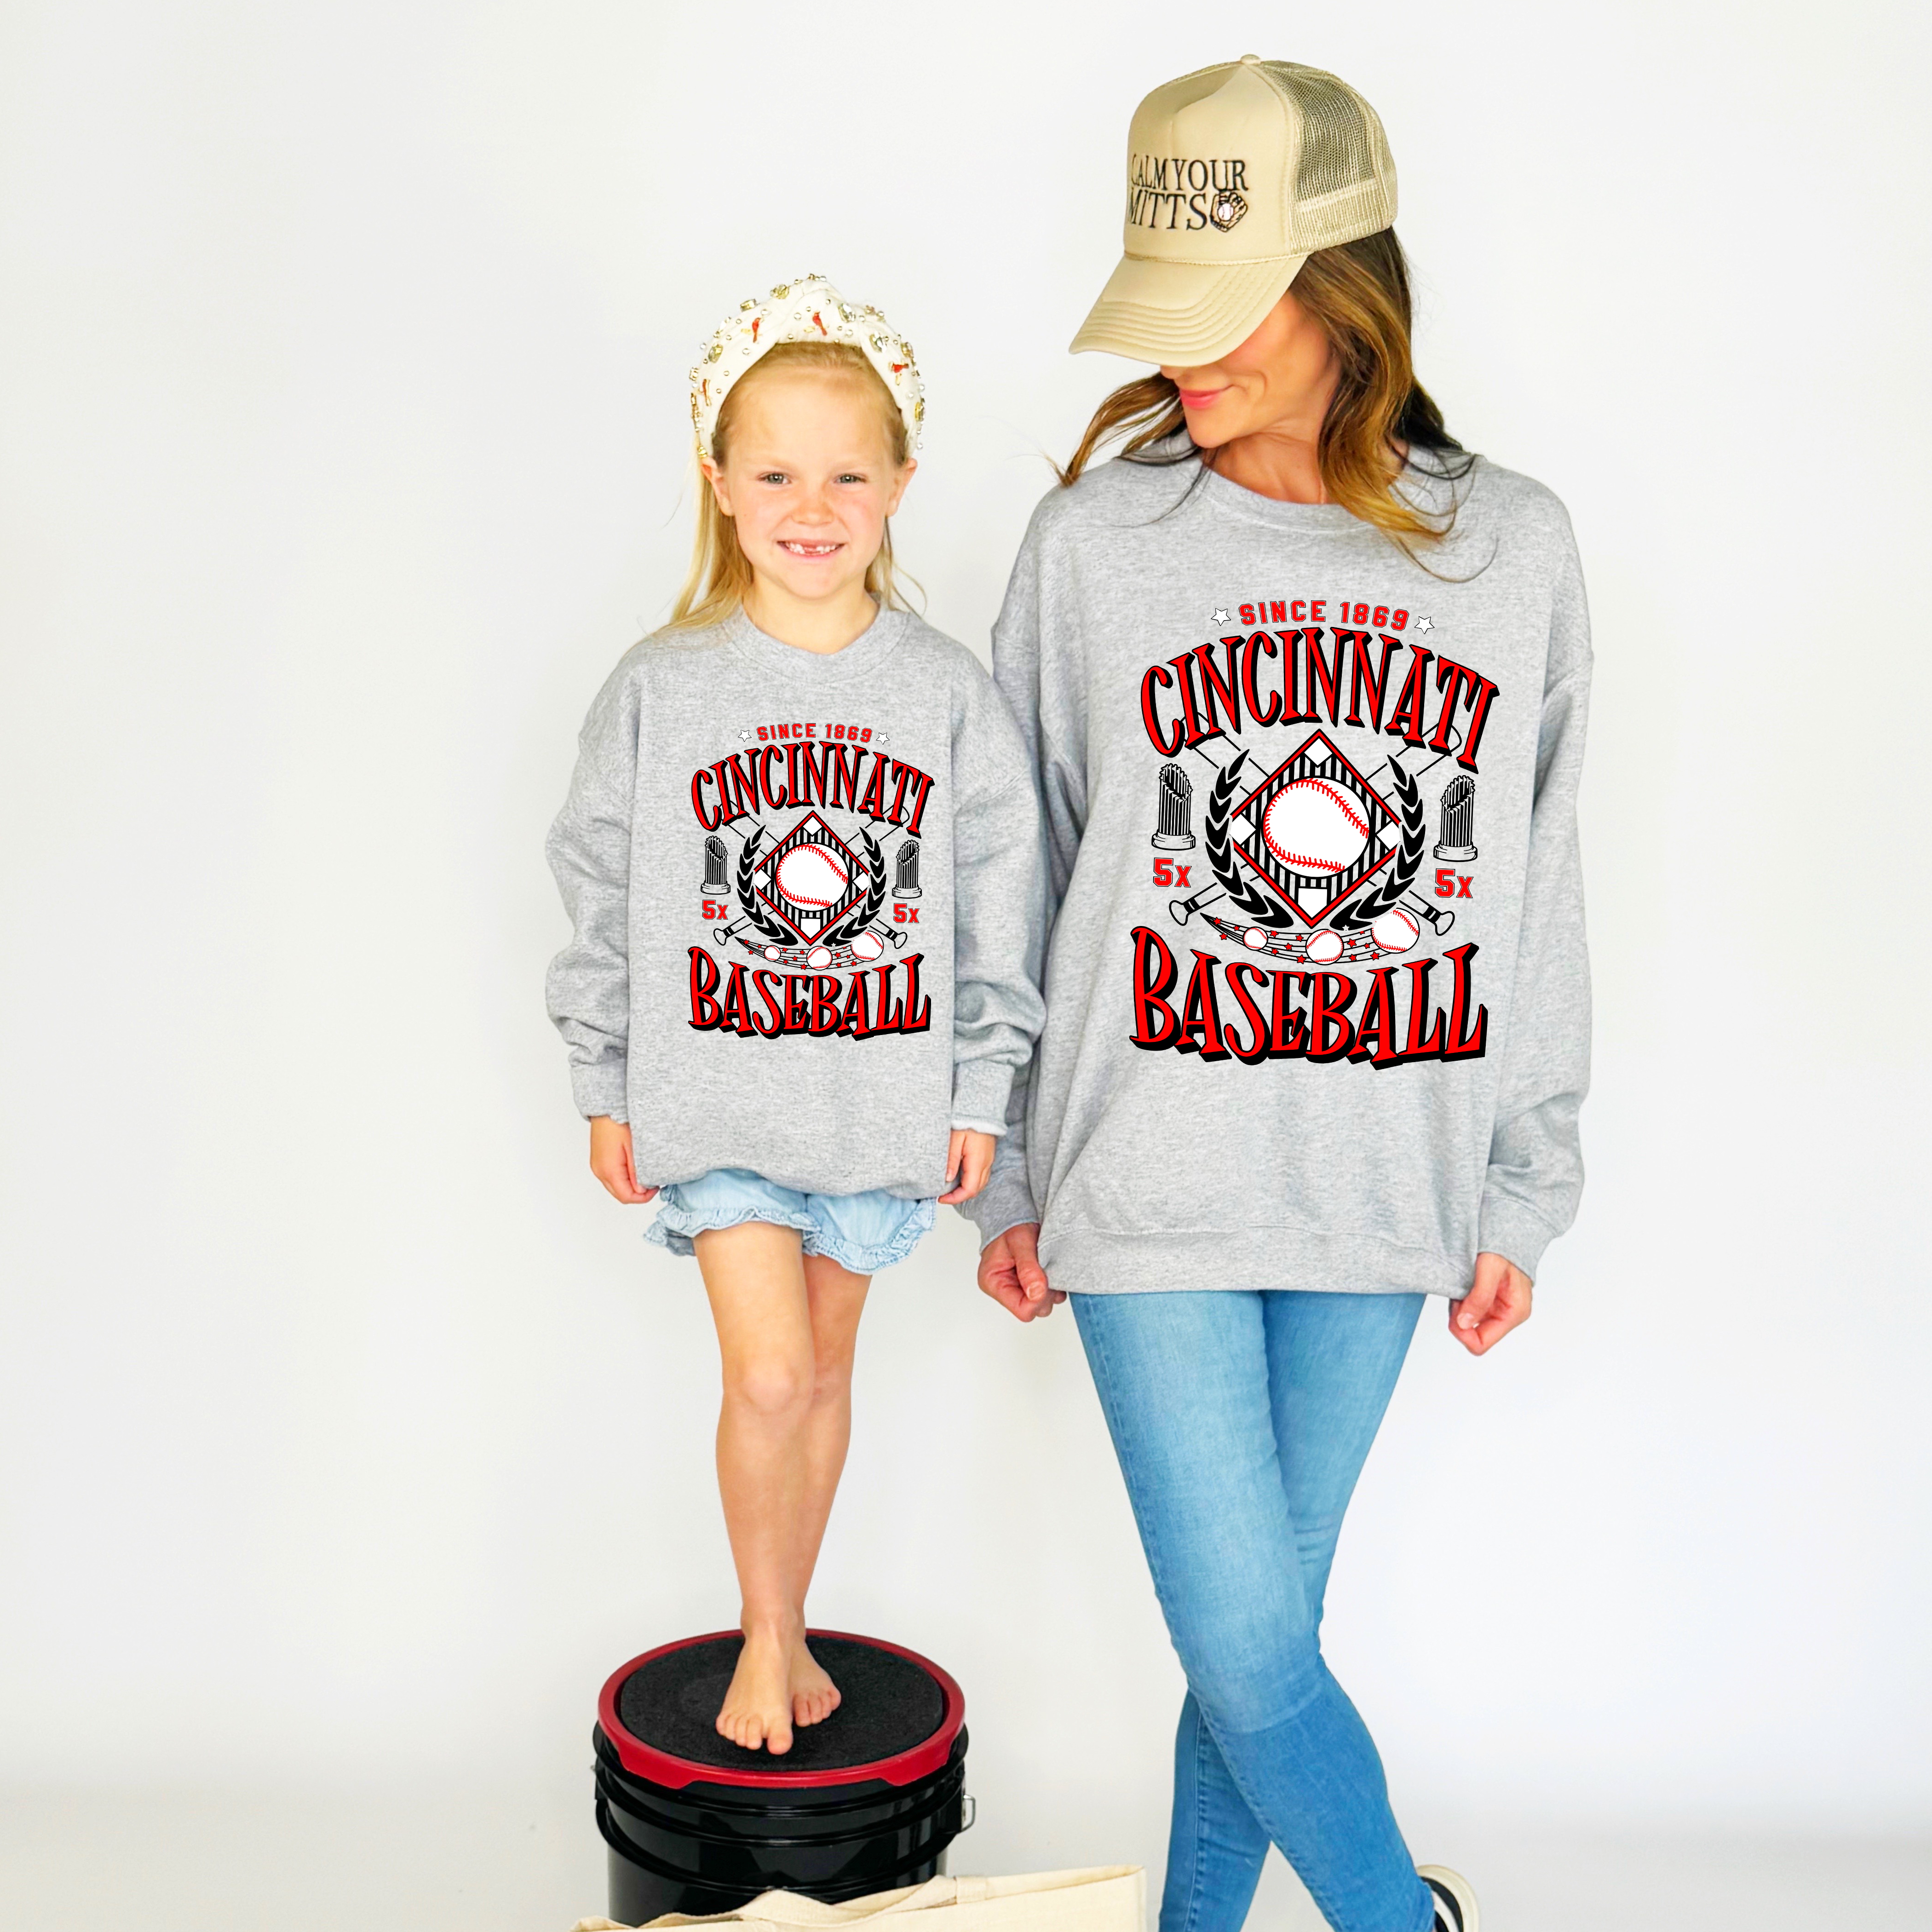 Cincinatti Baseball Team Youth & Adult Sweatshirt